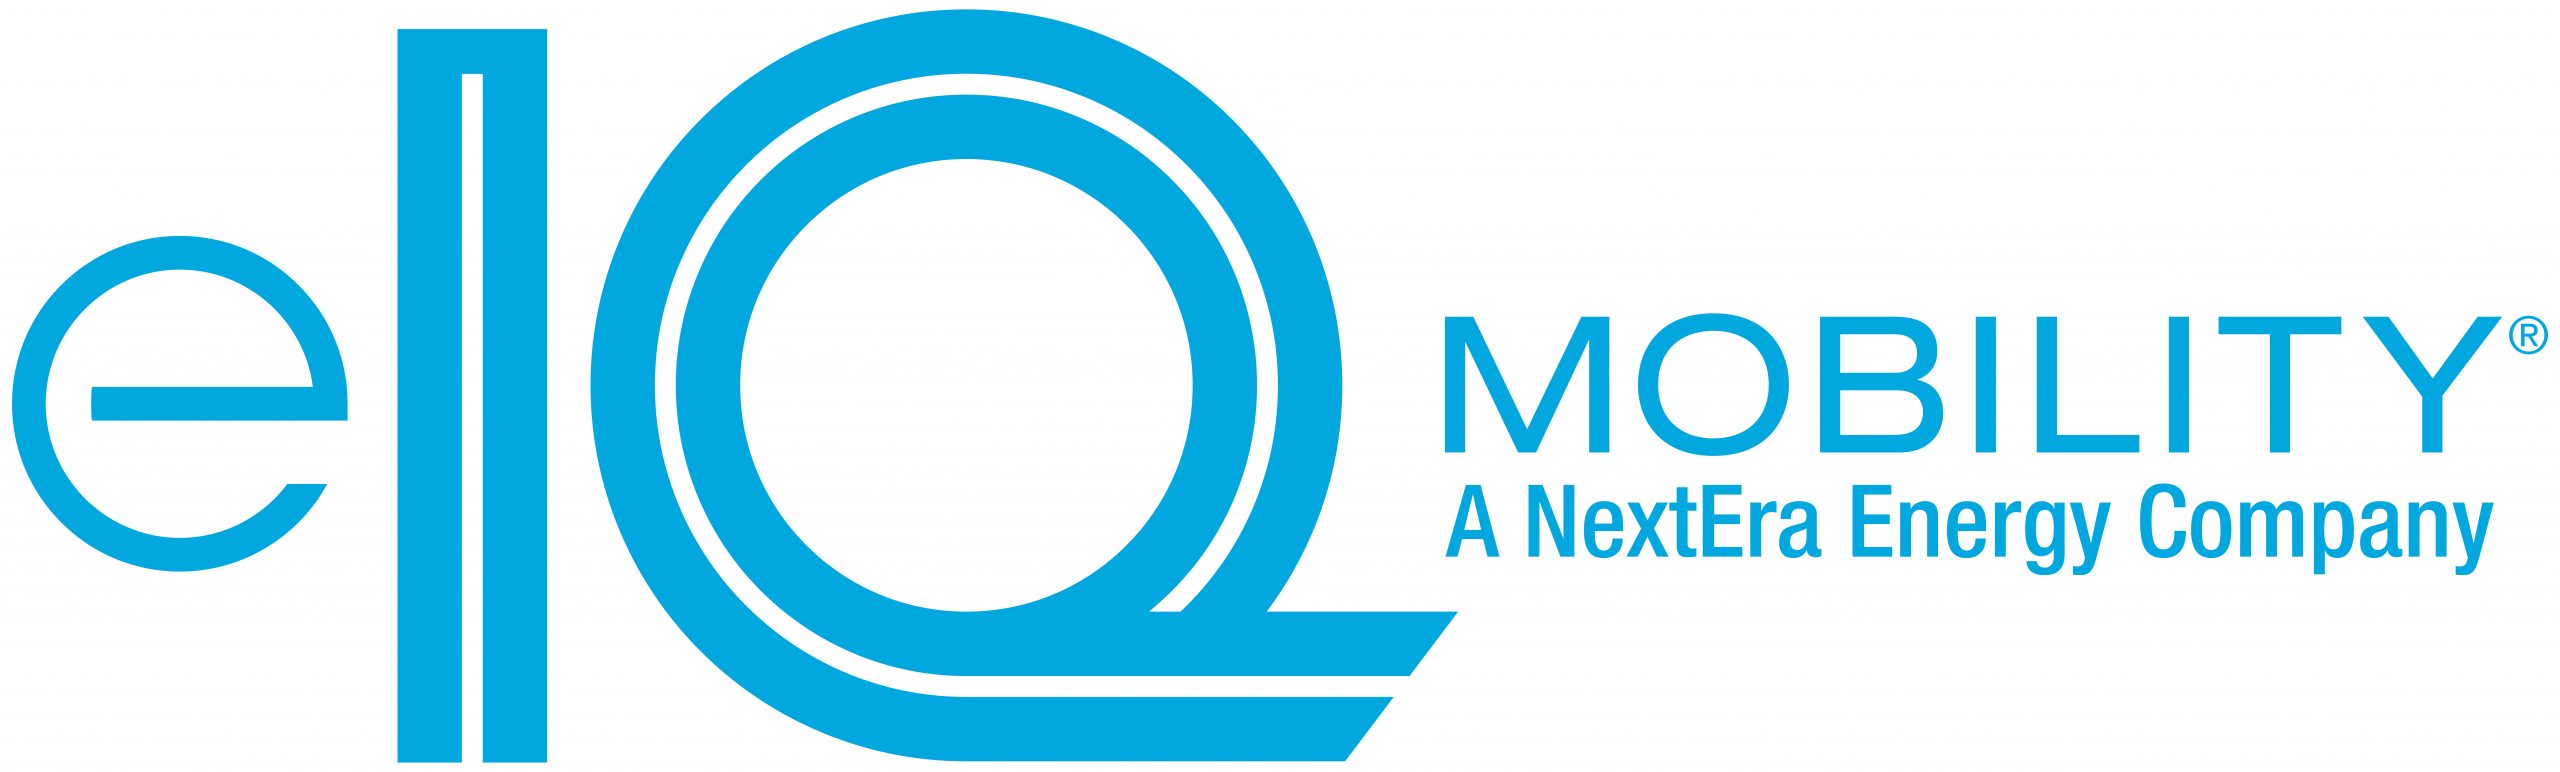 eIQ Mobility Logo